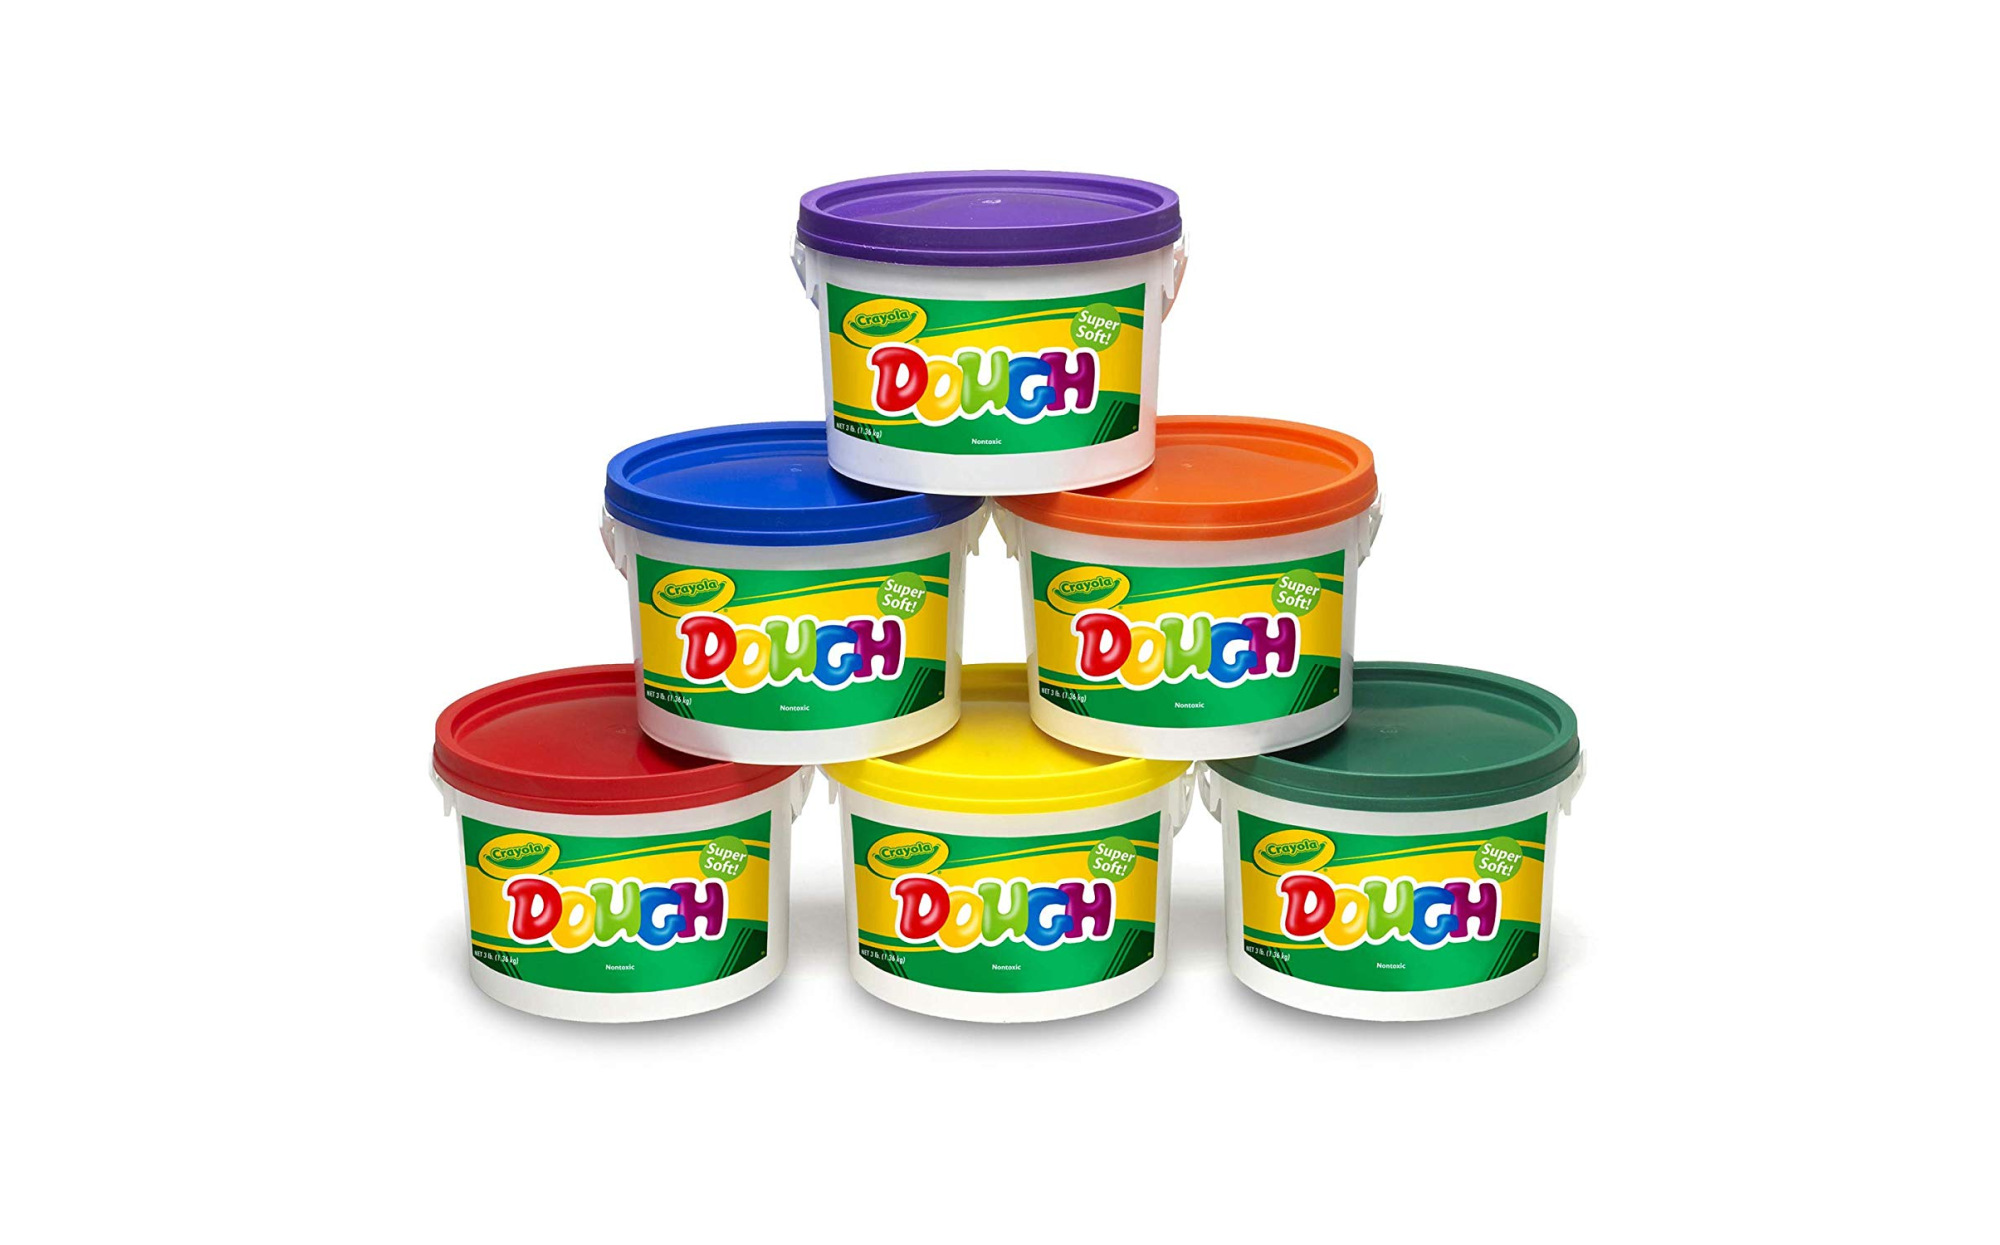 Play-Doh Multicolor Magic Play Dough Set - 20 Color (20 Piece